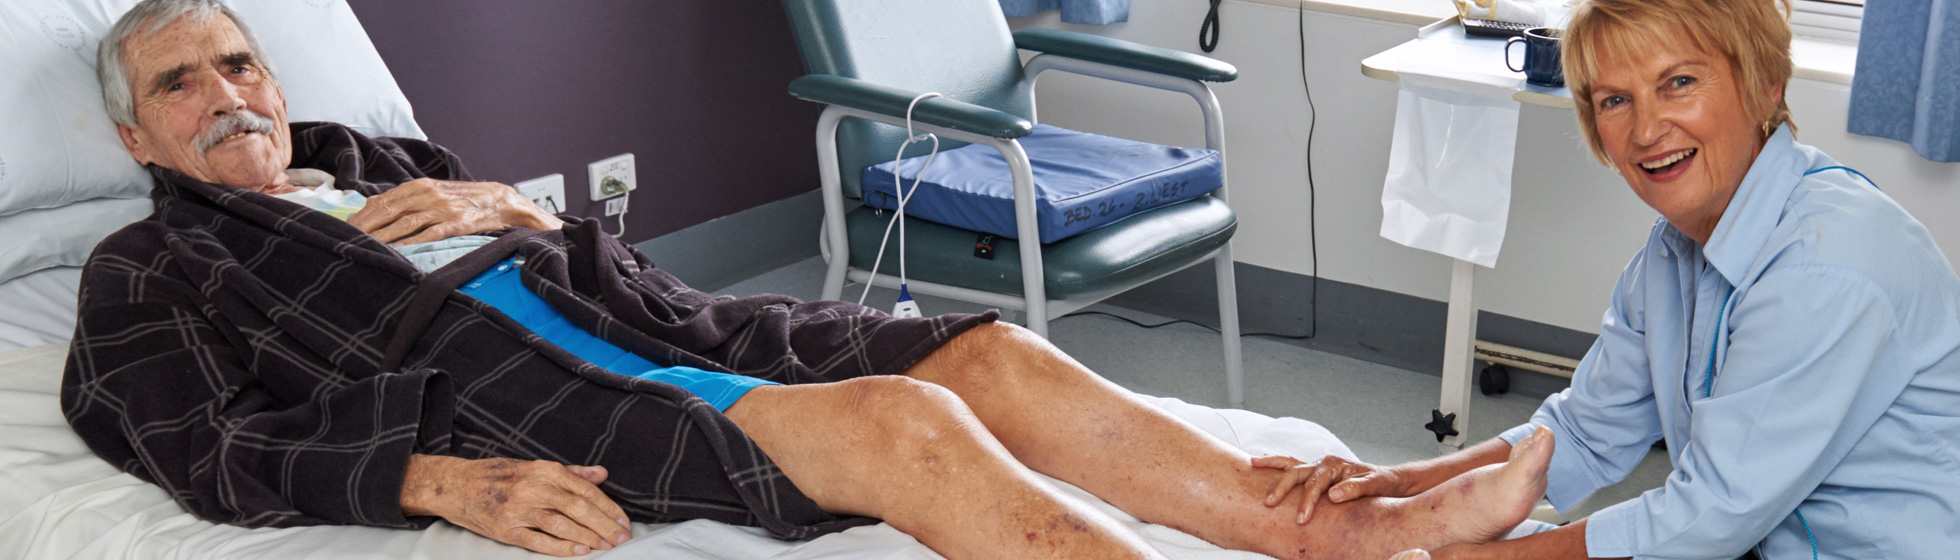 Patient receiving foot massage in hospital bed